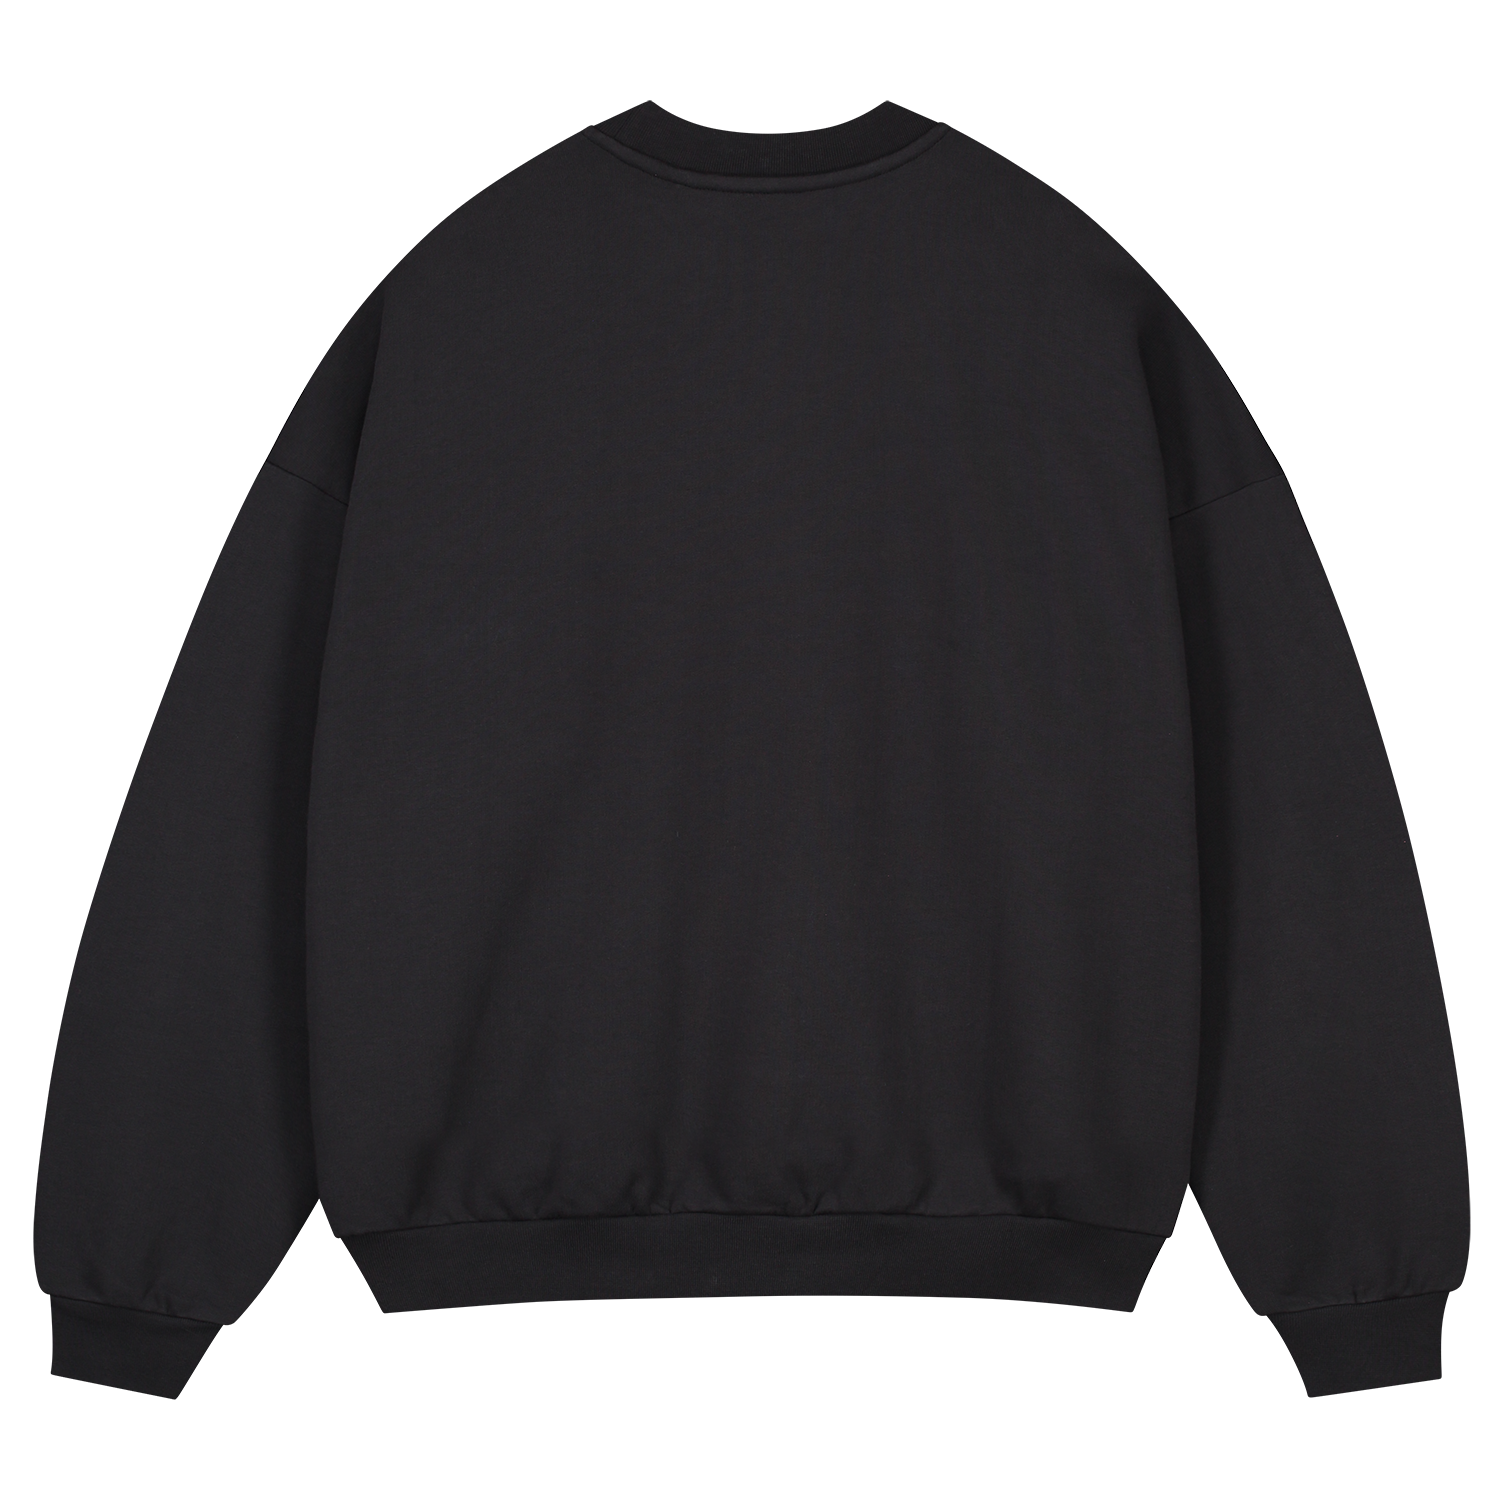 Sweater zwart